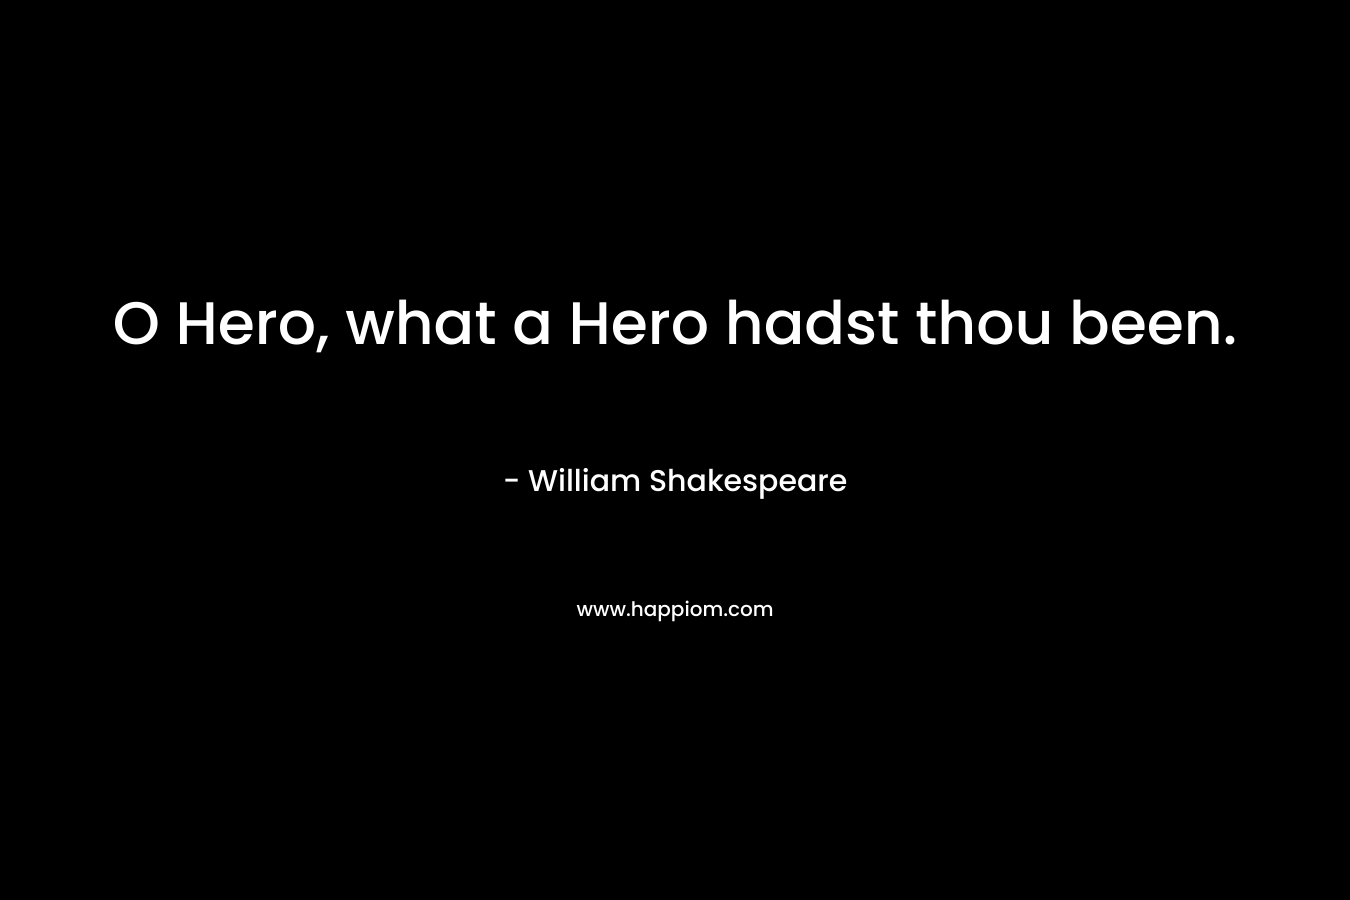 O Hero, what a Hero hadst thou been.